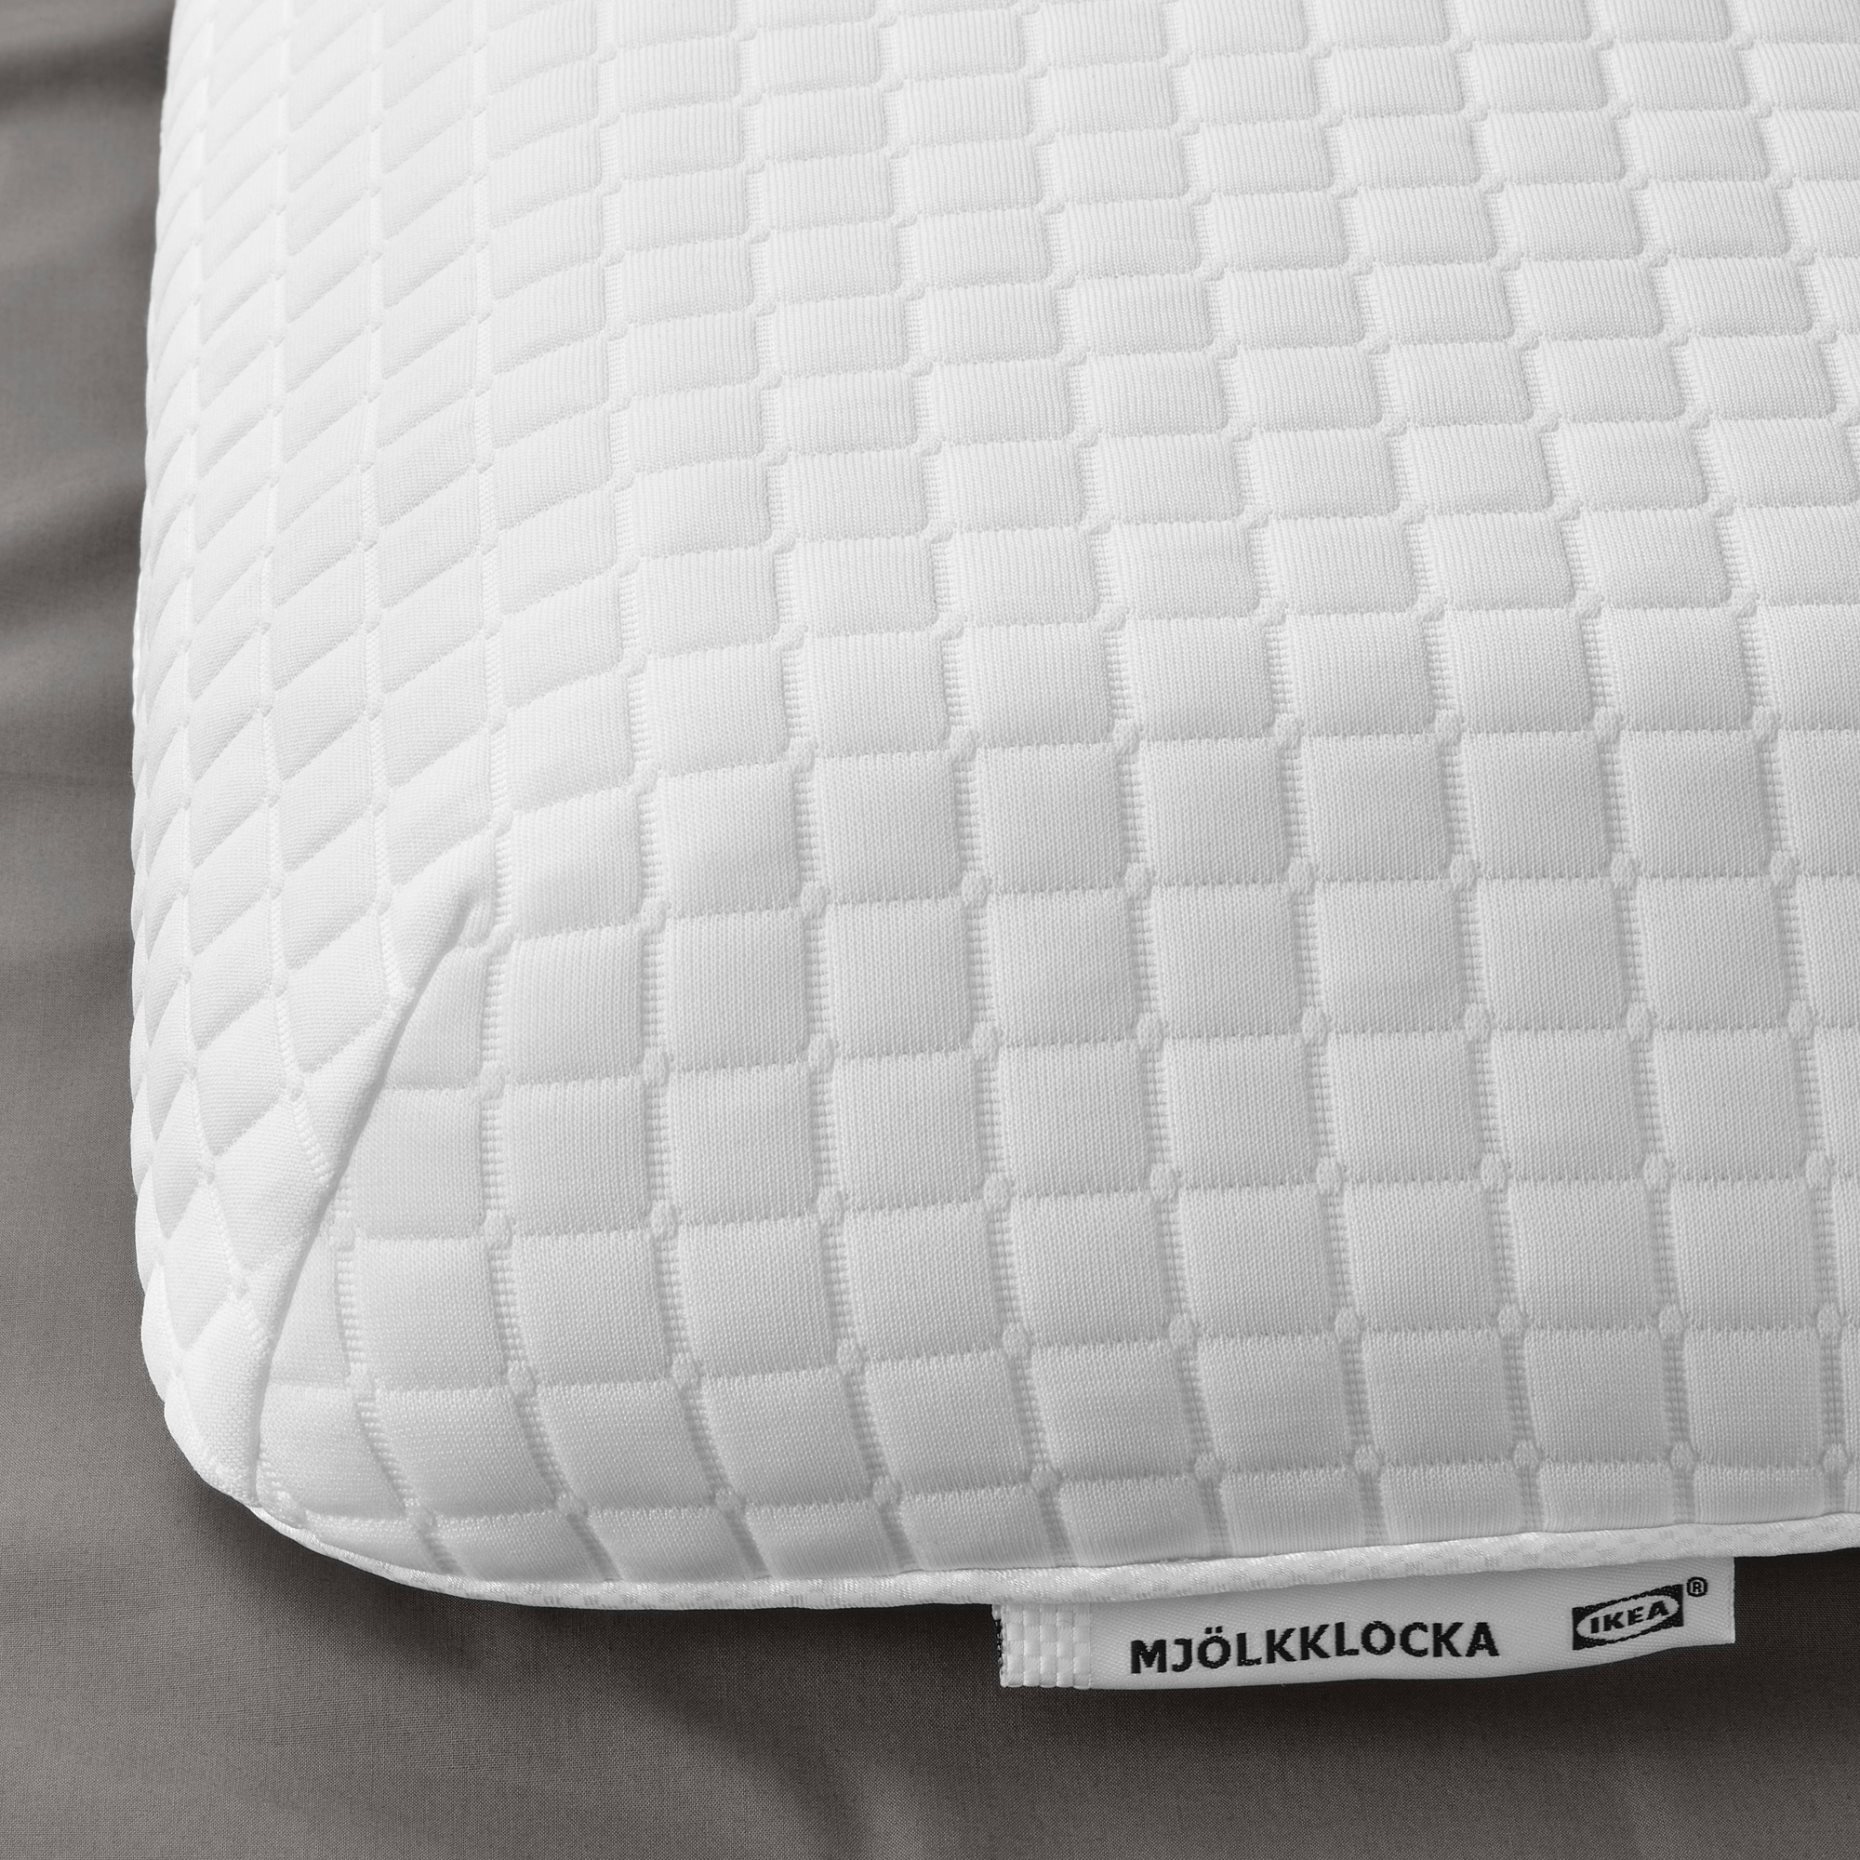 MJÖLKKLOCKA, εργονομικό μαξιλάρι, ύπνος στο πλάι/ανάσκελα, 604.467.67